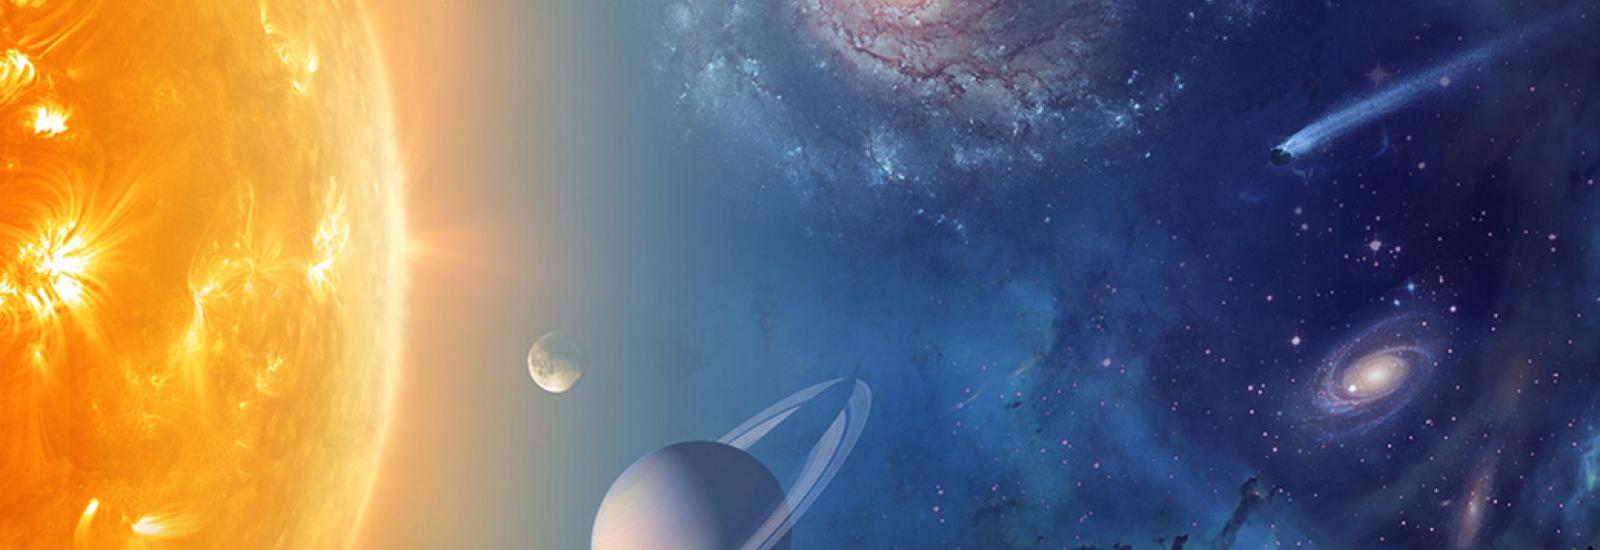 NASA Image with Sun, Planets, and Galaxies